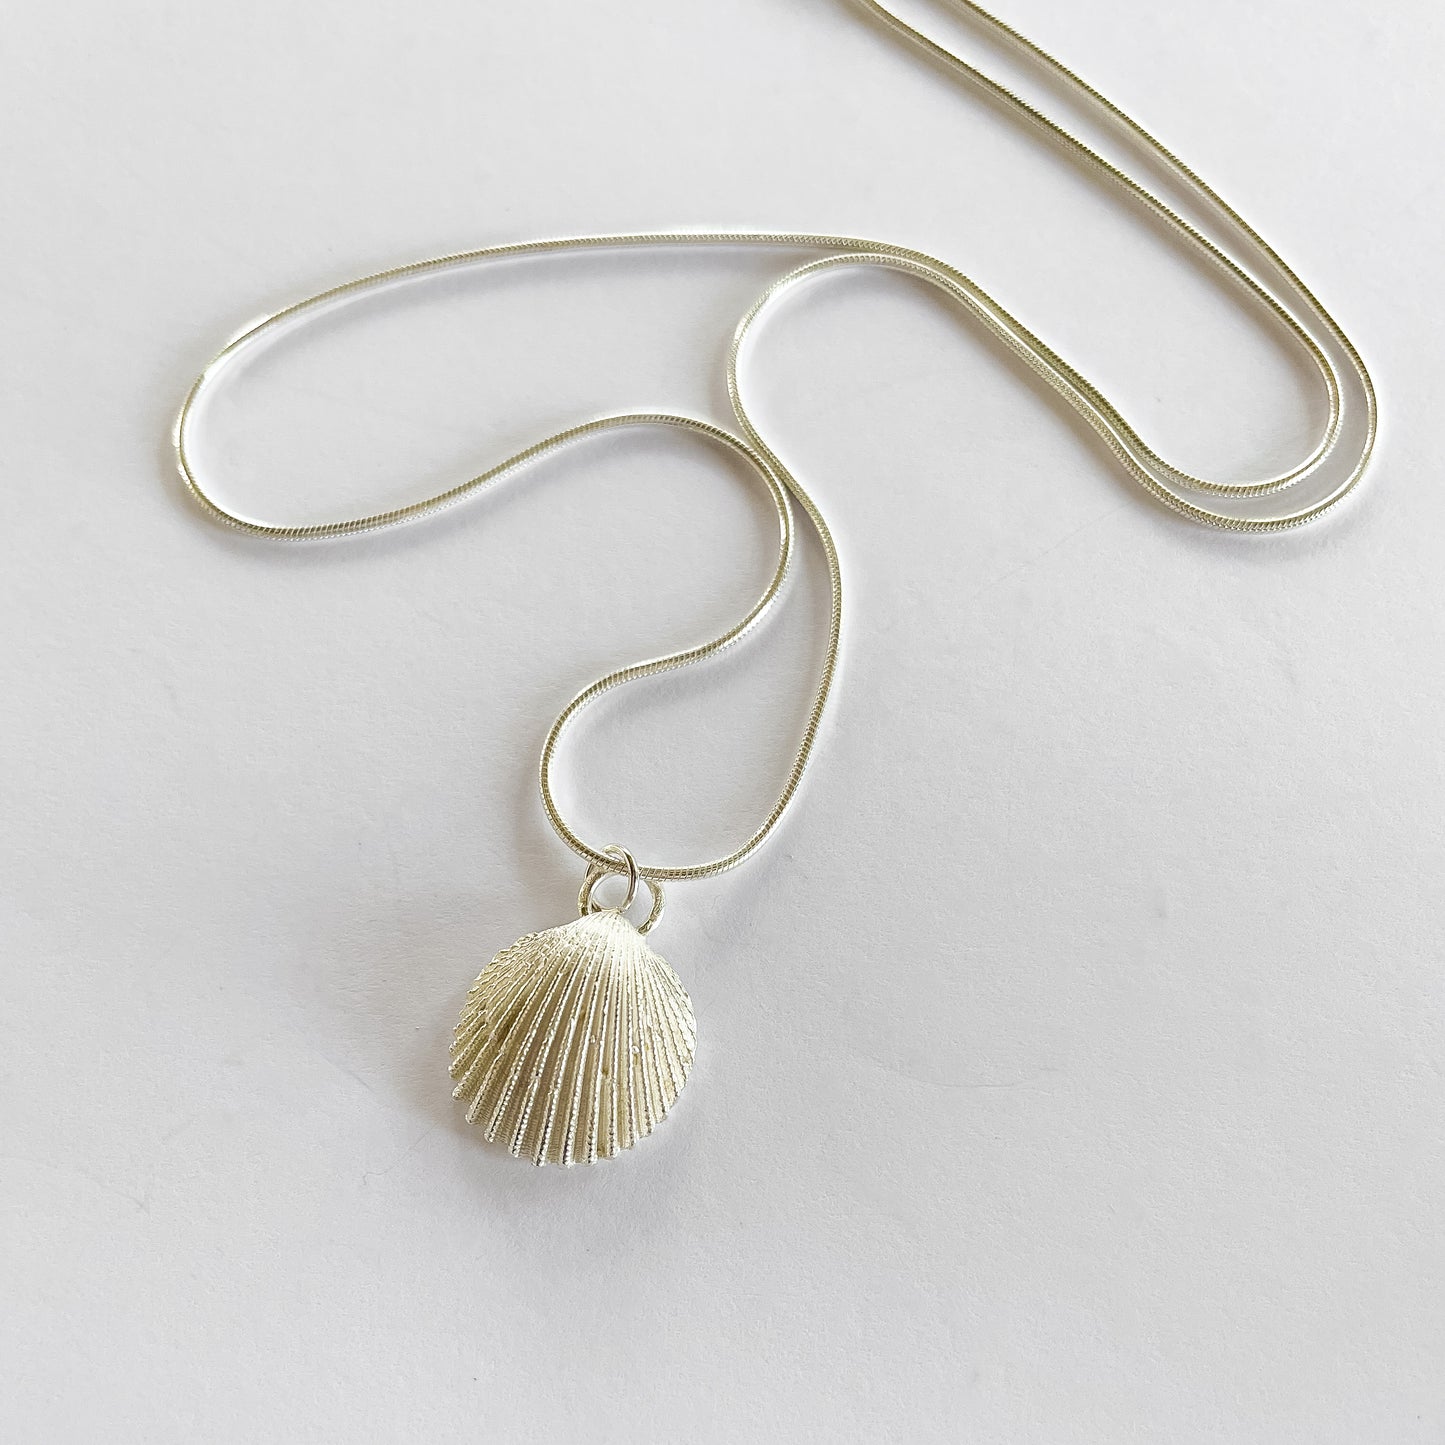 Livi Sea Shell necklace